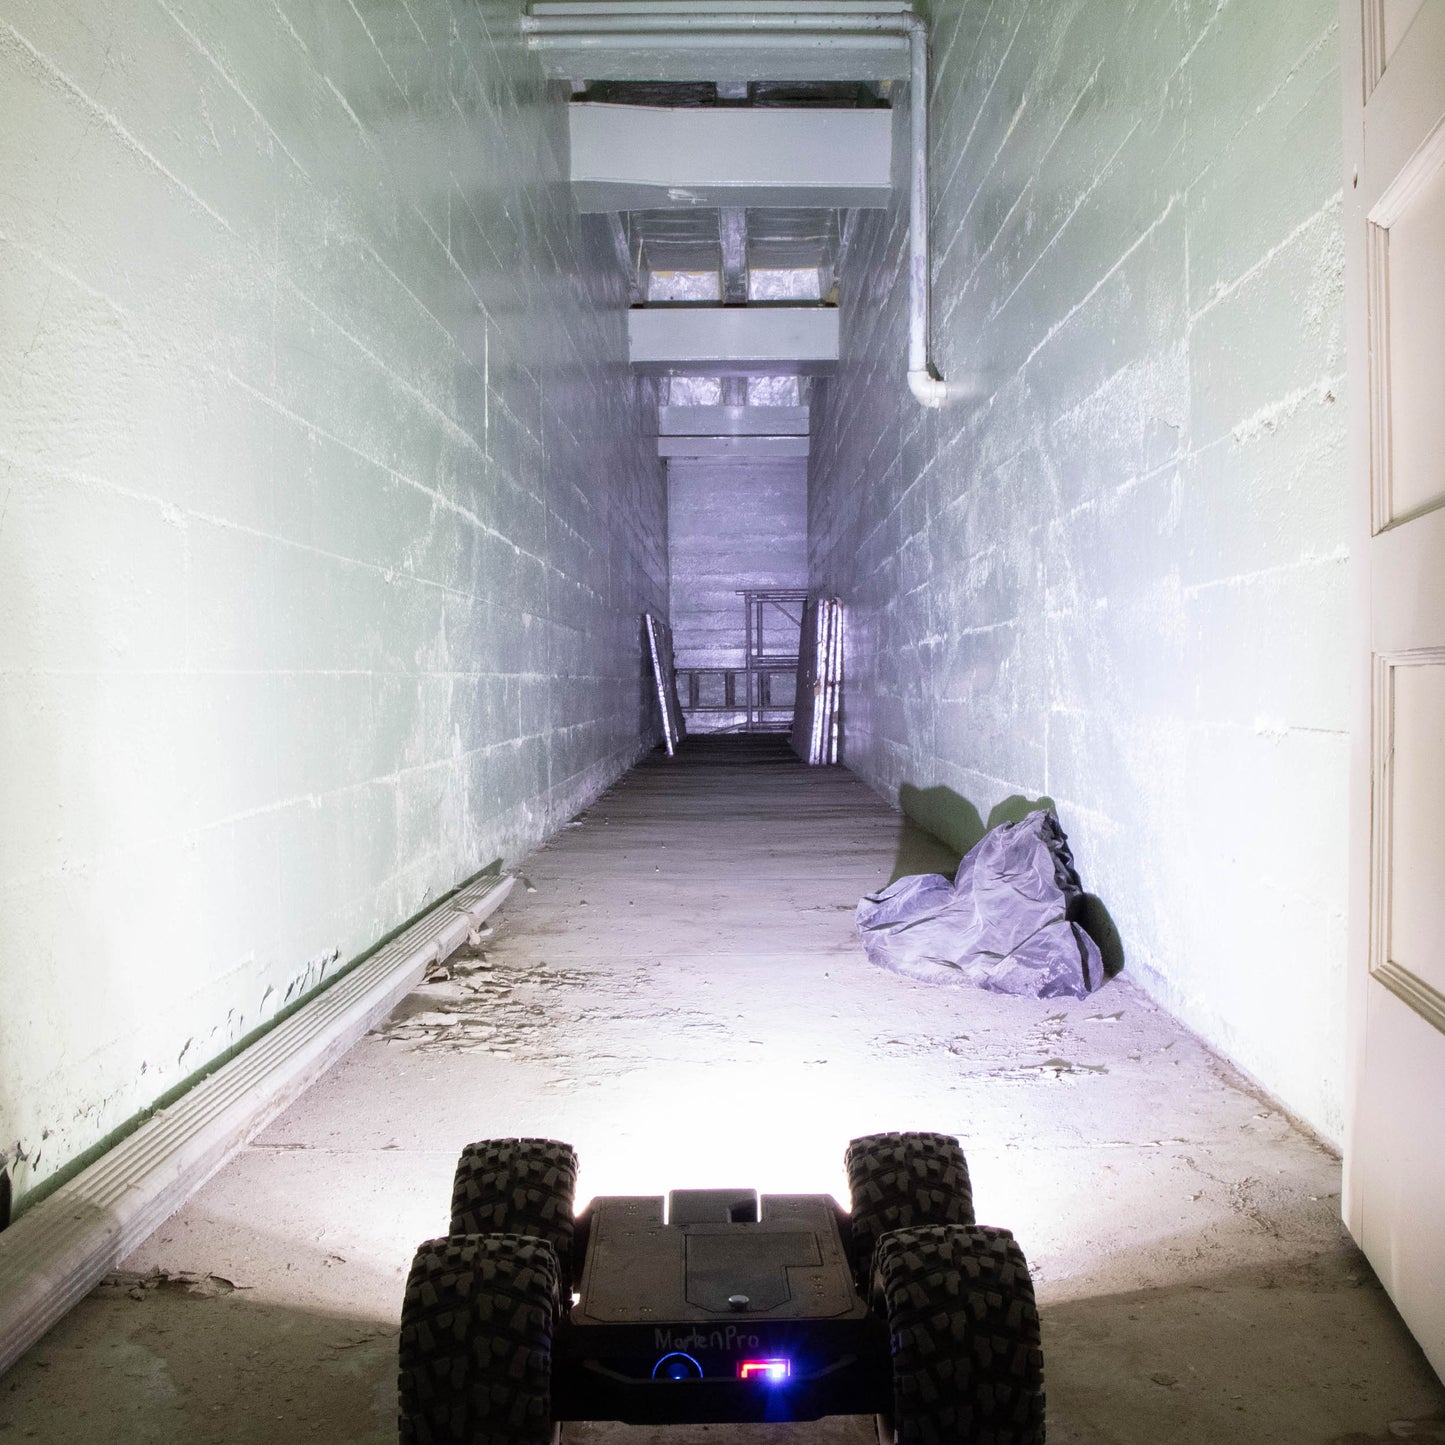 Marten MK2 Pro Advanced Robot Inspection Crawler